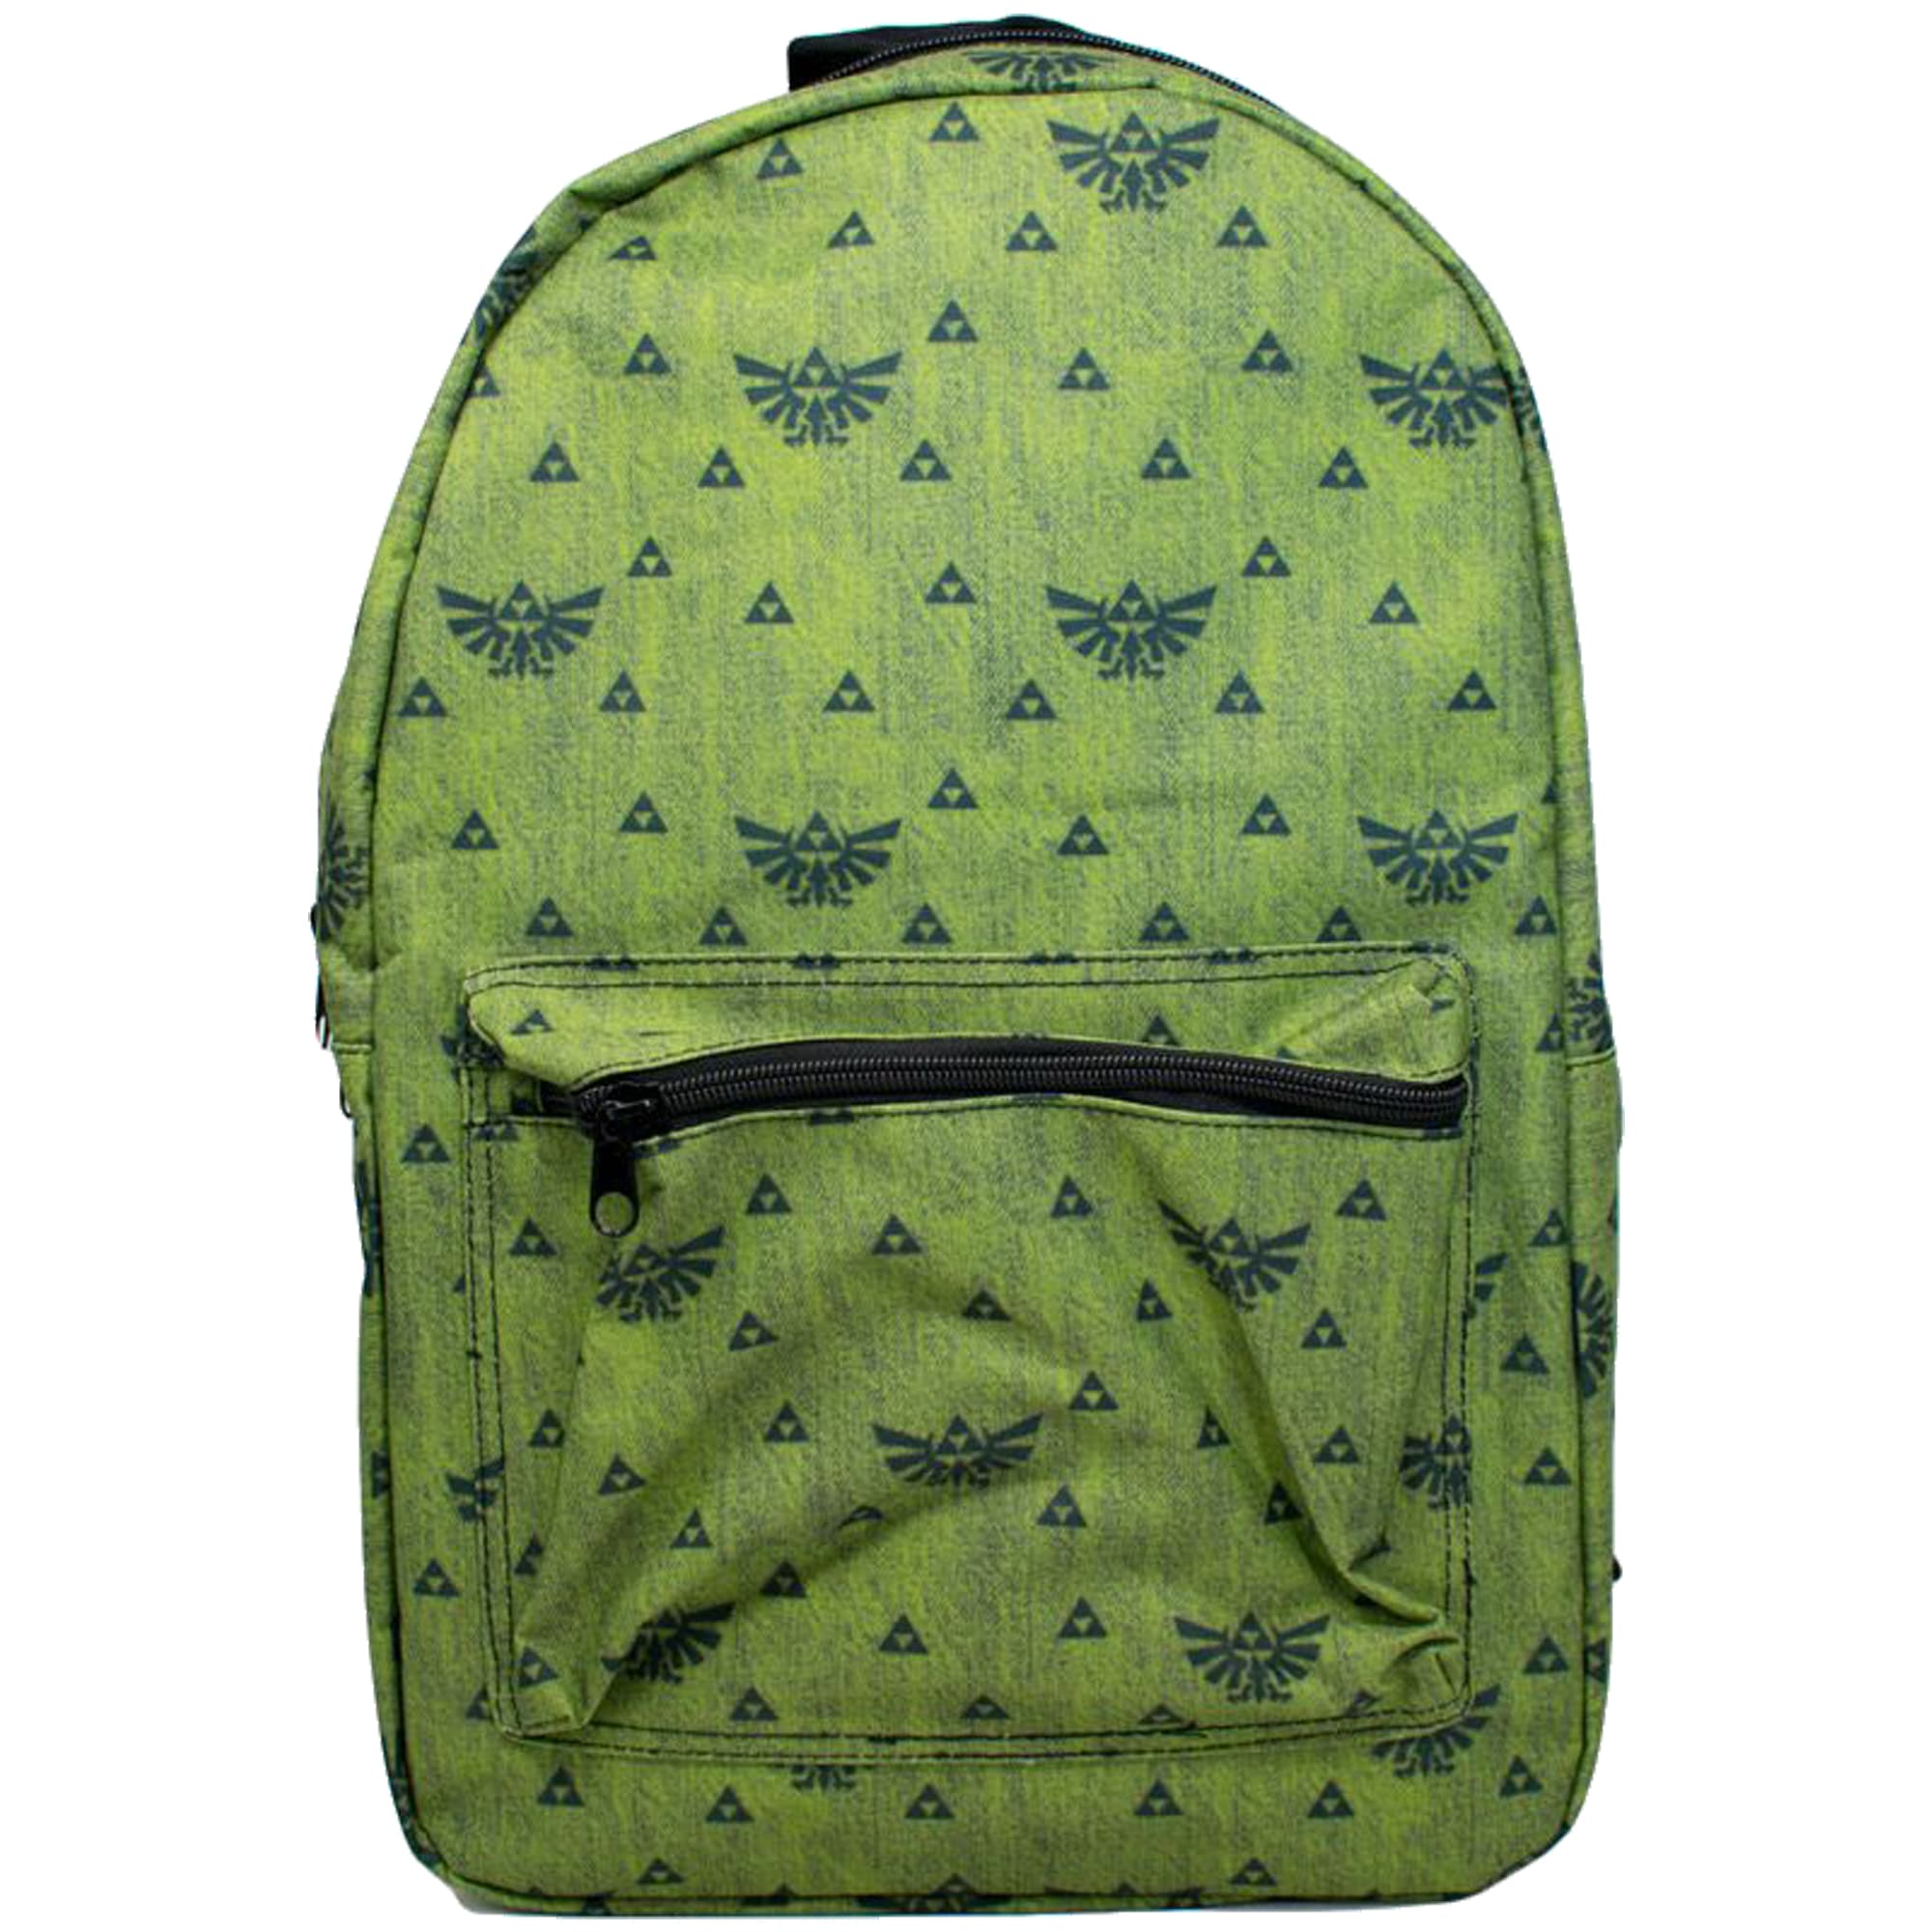 The Legend of Zelda Backpack - Green